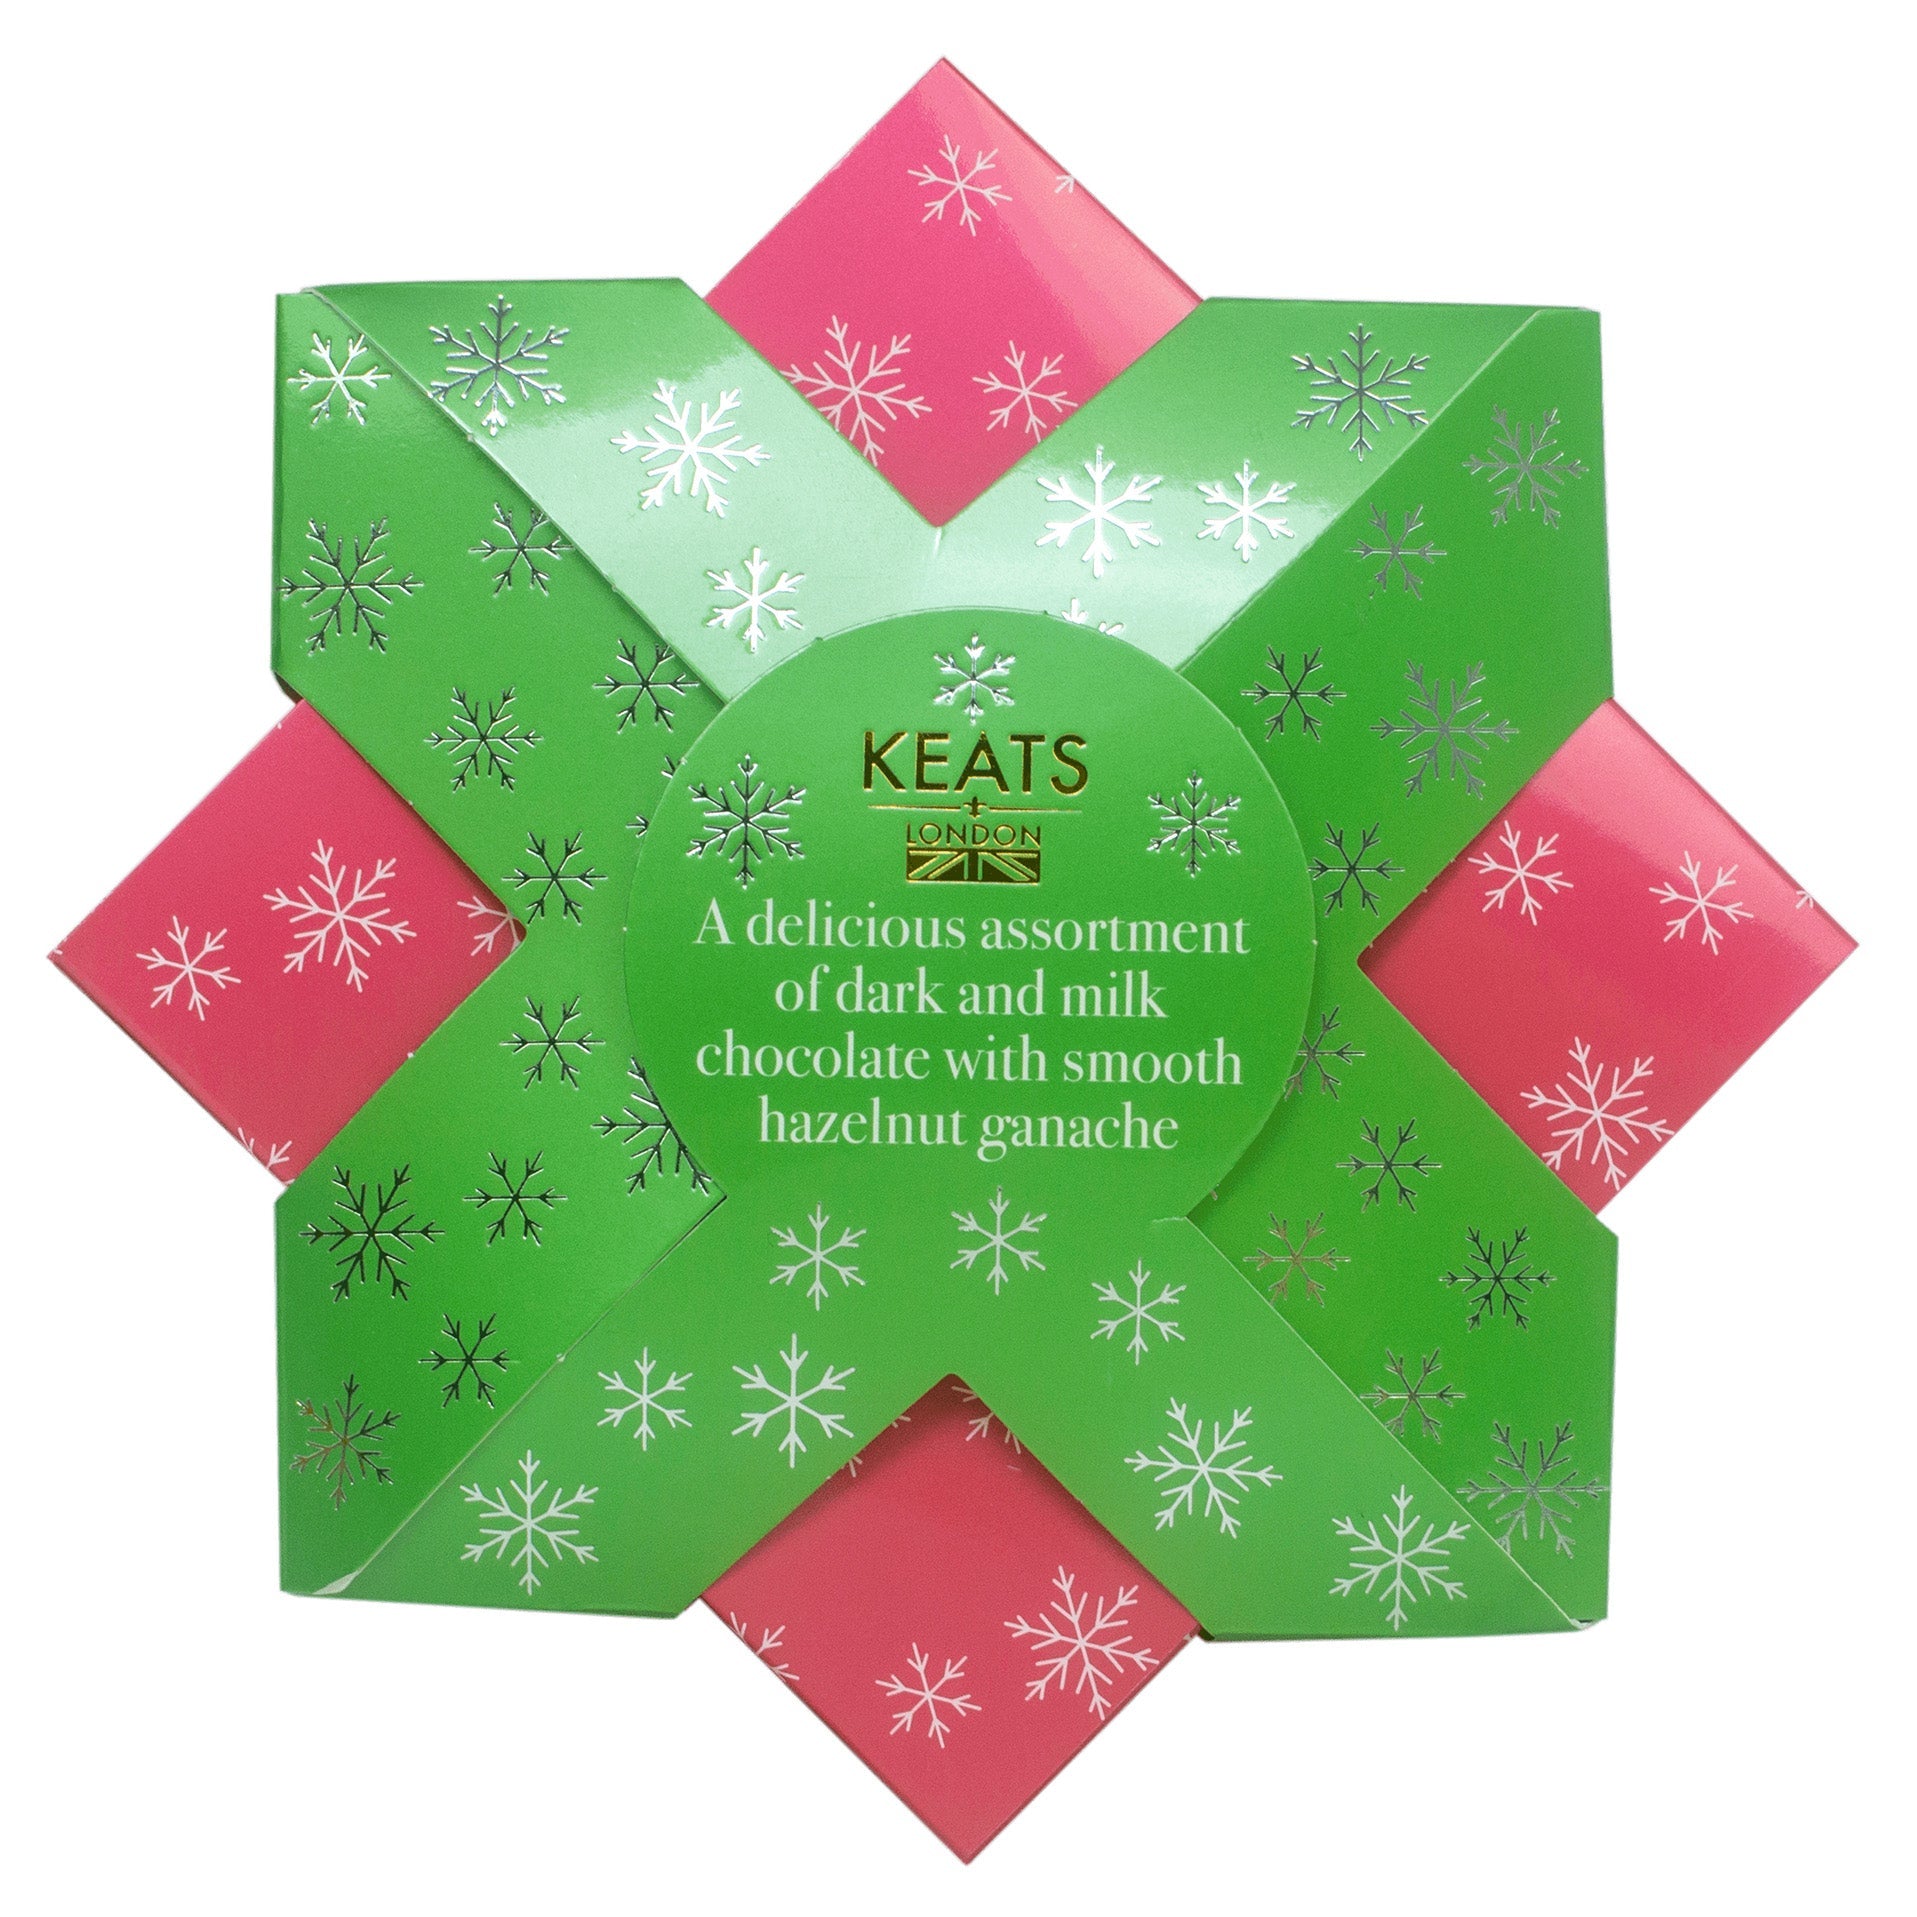 Keats Milk & Dark Chocolate Hazelnut Star (150g) by Keats - The Pop Up Deli